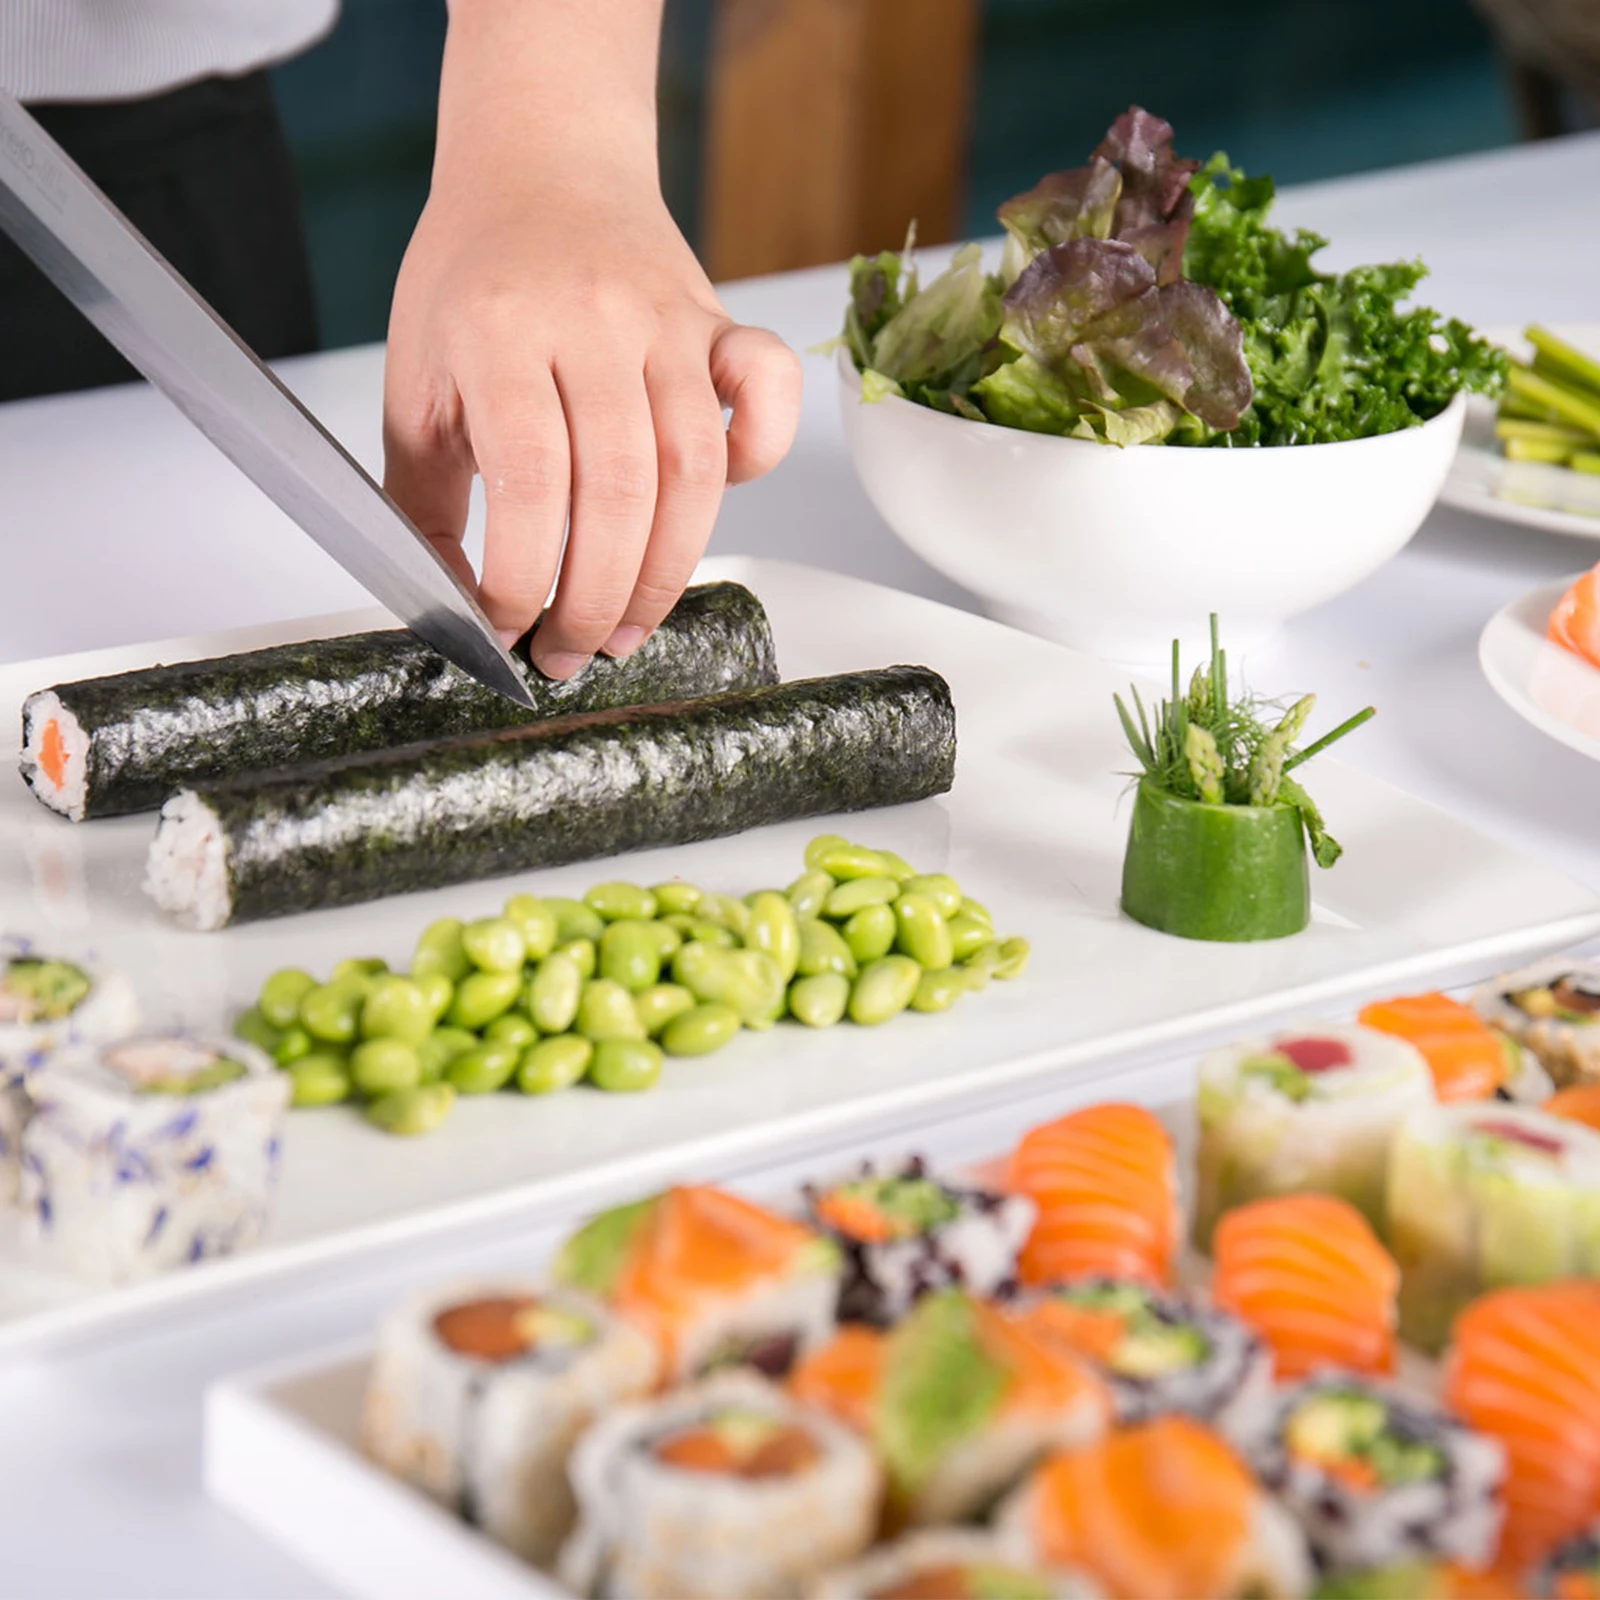 https://ae01.alicdn.com/kf/S8b86d8f78e3341feabba695288fd2ec0i/Ourwarm-12-Pcs-Sushi-Making-Set-Home-DIY-Japanese-Sushi-Rolling-Mold-Kit-Roll-Maker-for.jpg